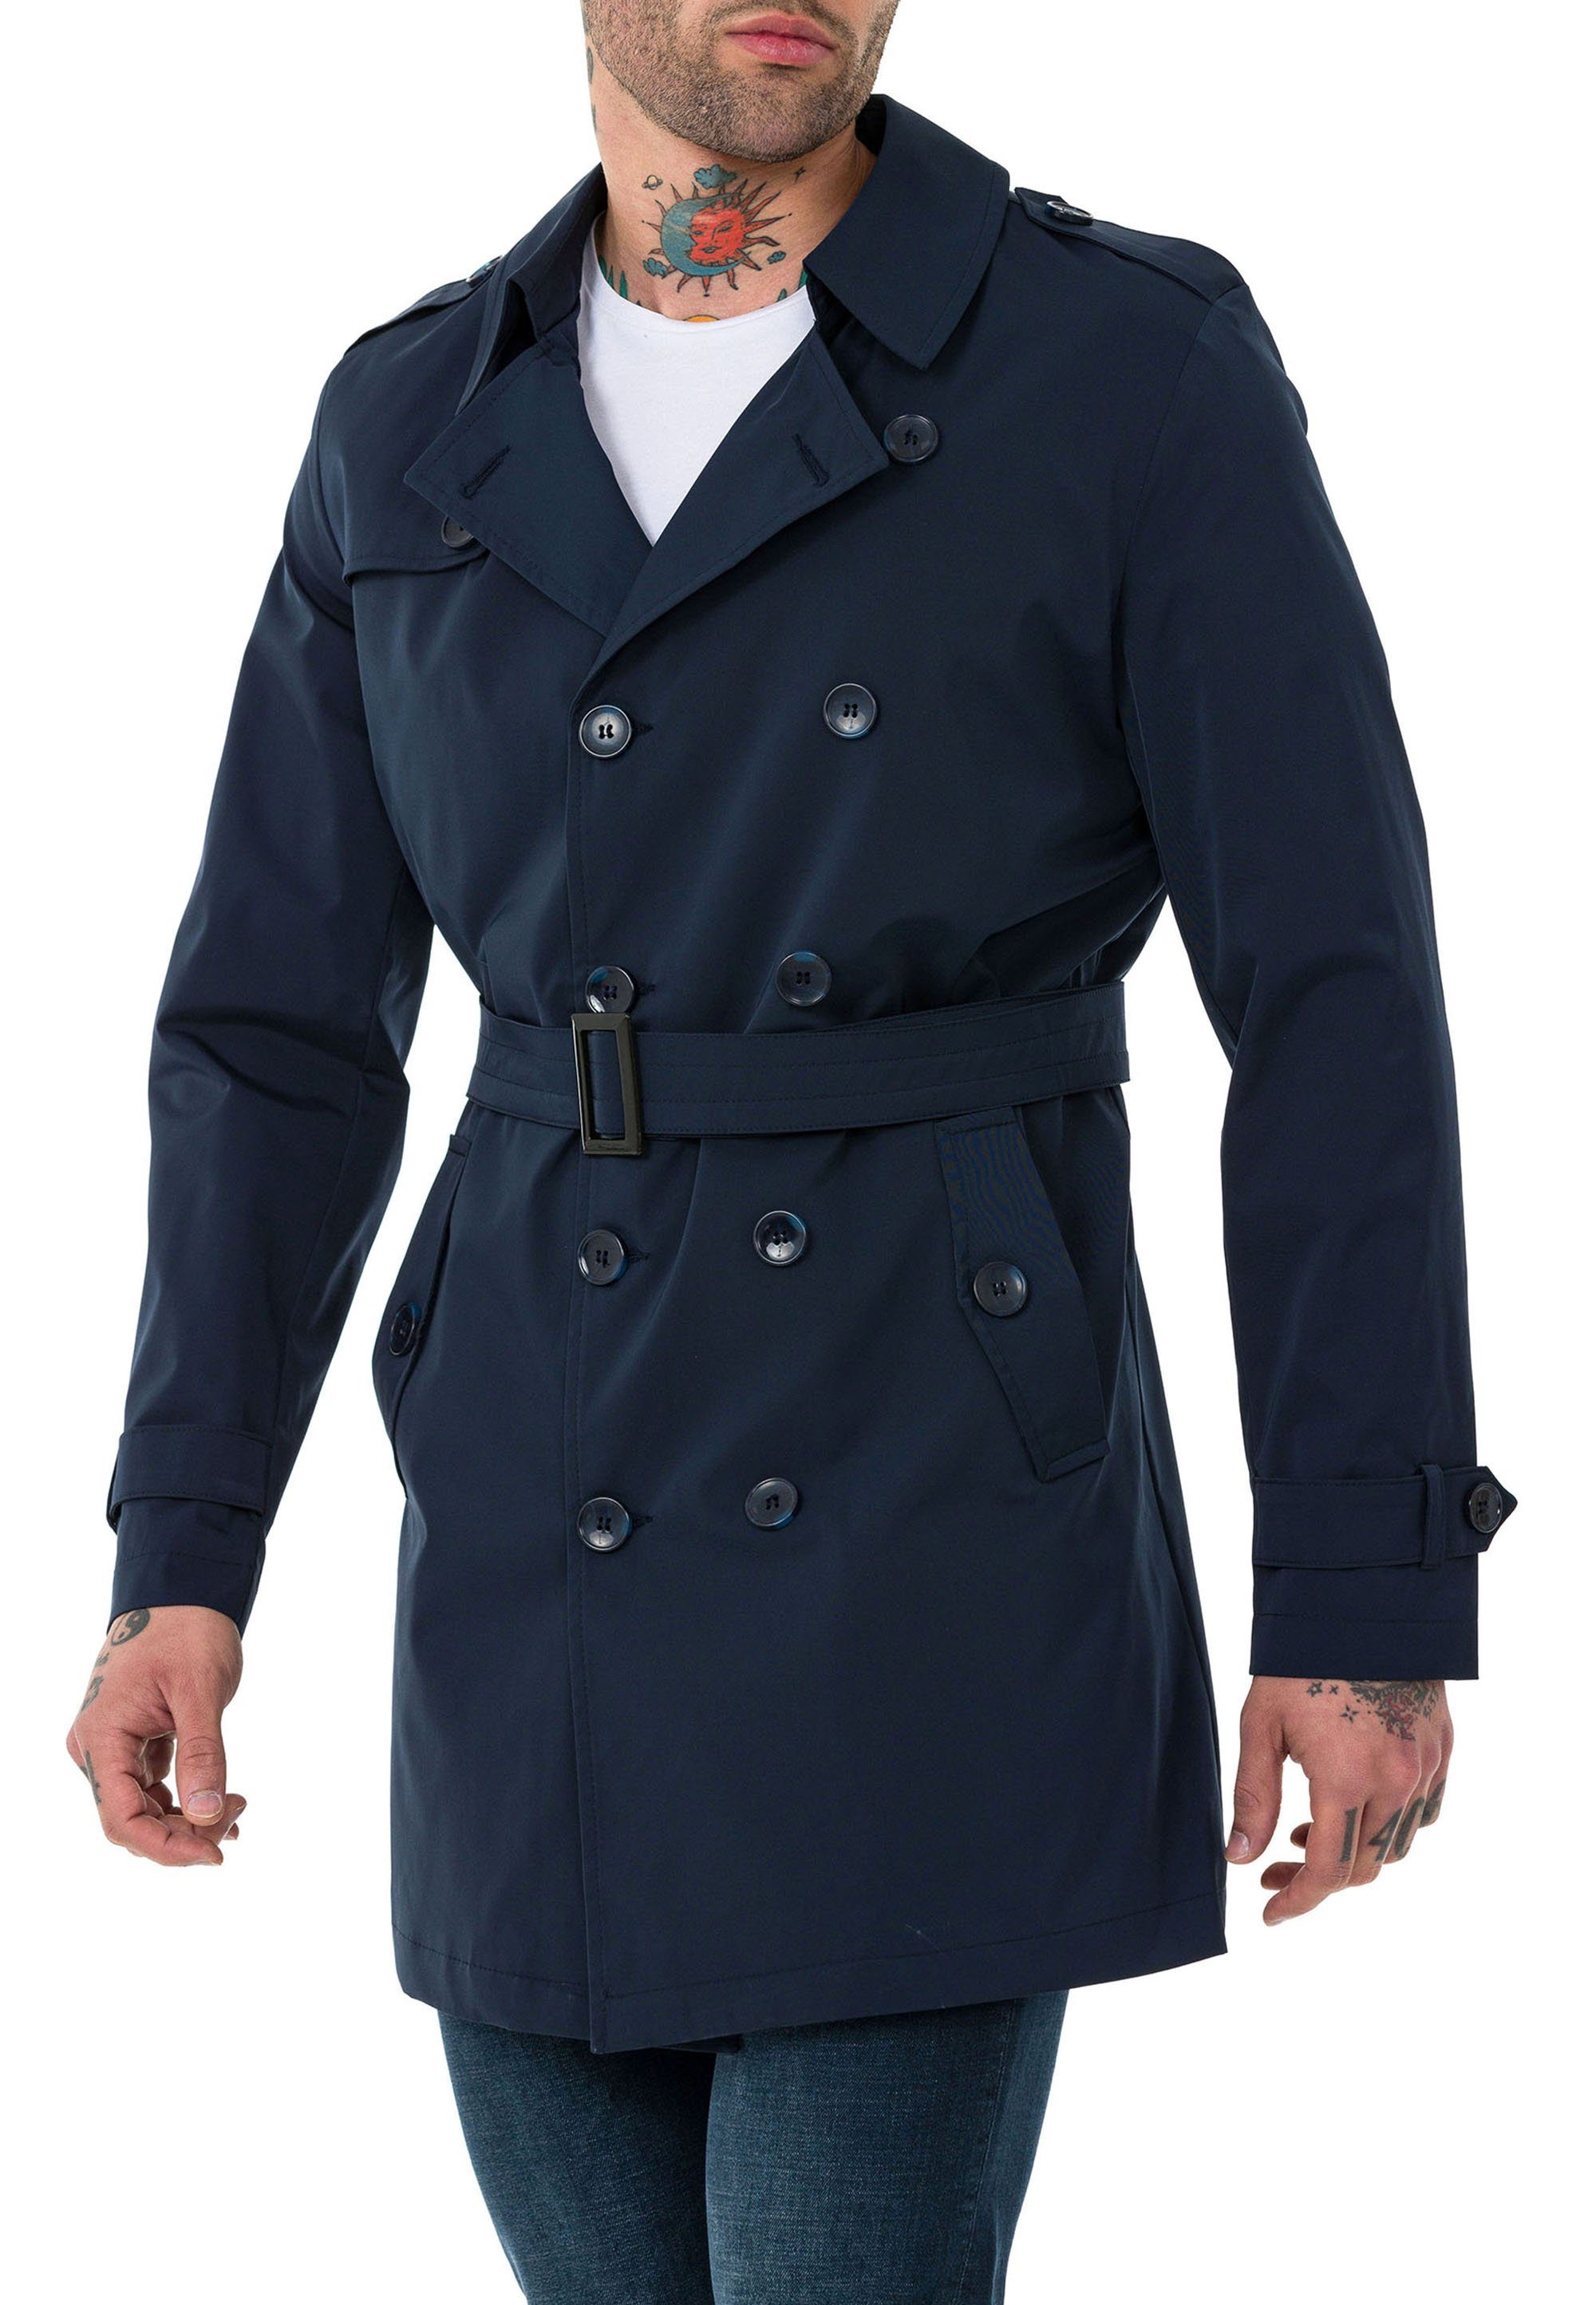 RedBridge Trenchcoat Red Bridge Herren Mantel Trenchcoat Jacke Light Version Navy Blau S Premium Qualität